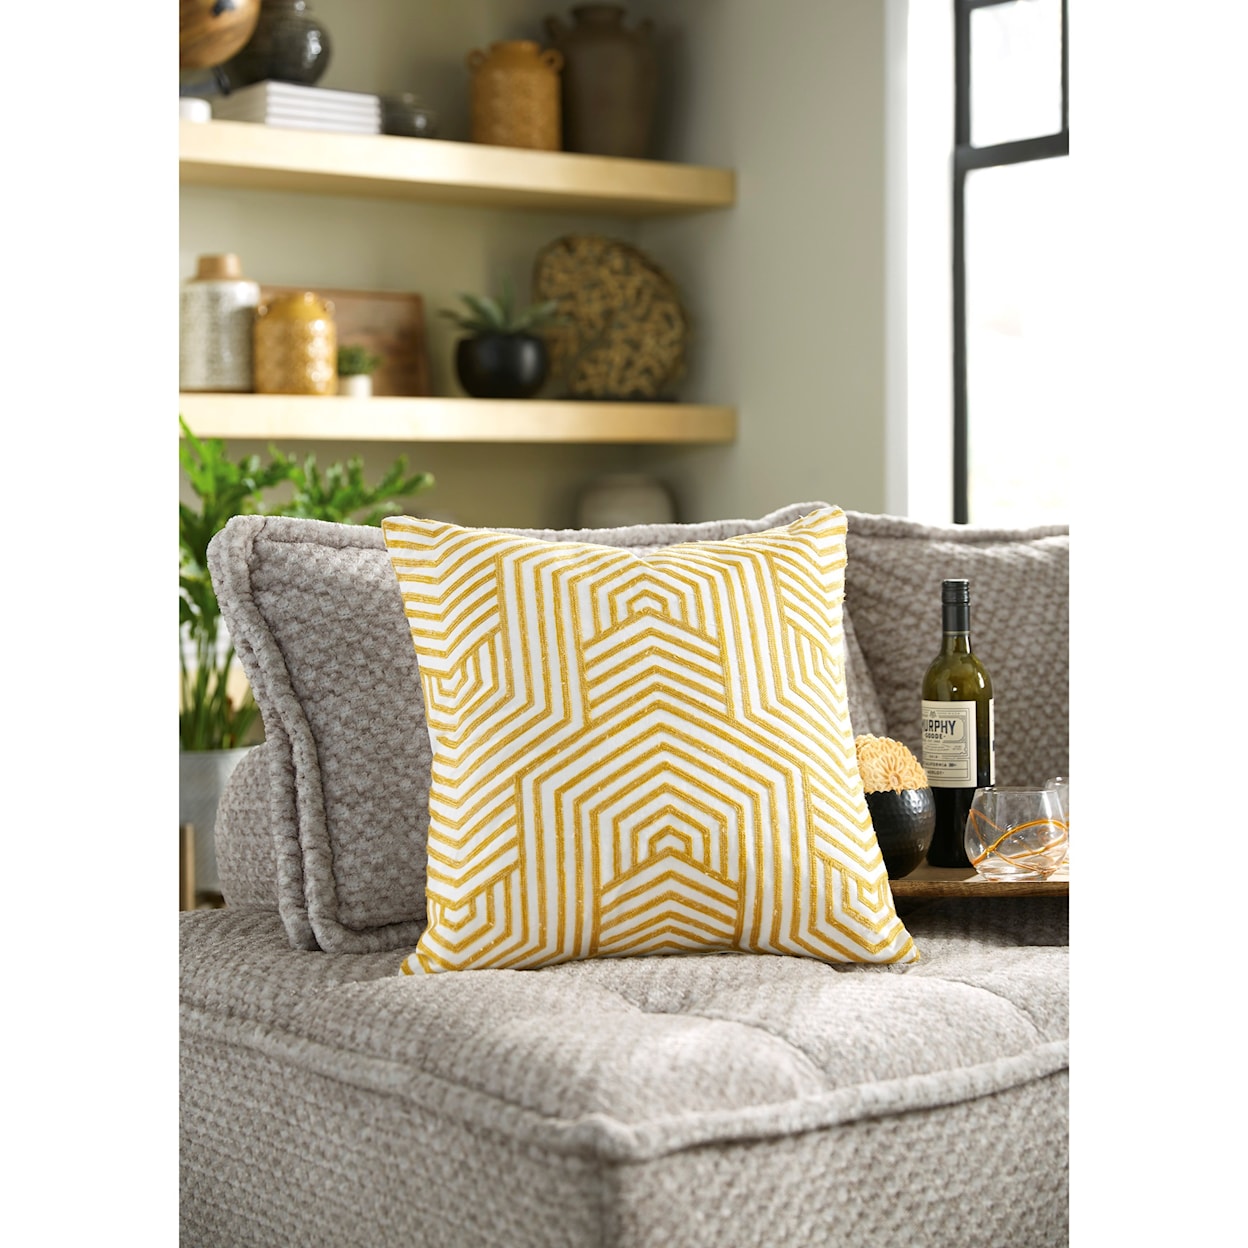 Ashley Furniture Signature Design Pillows Adrik Golden Yellow Pillow